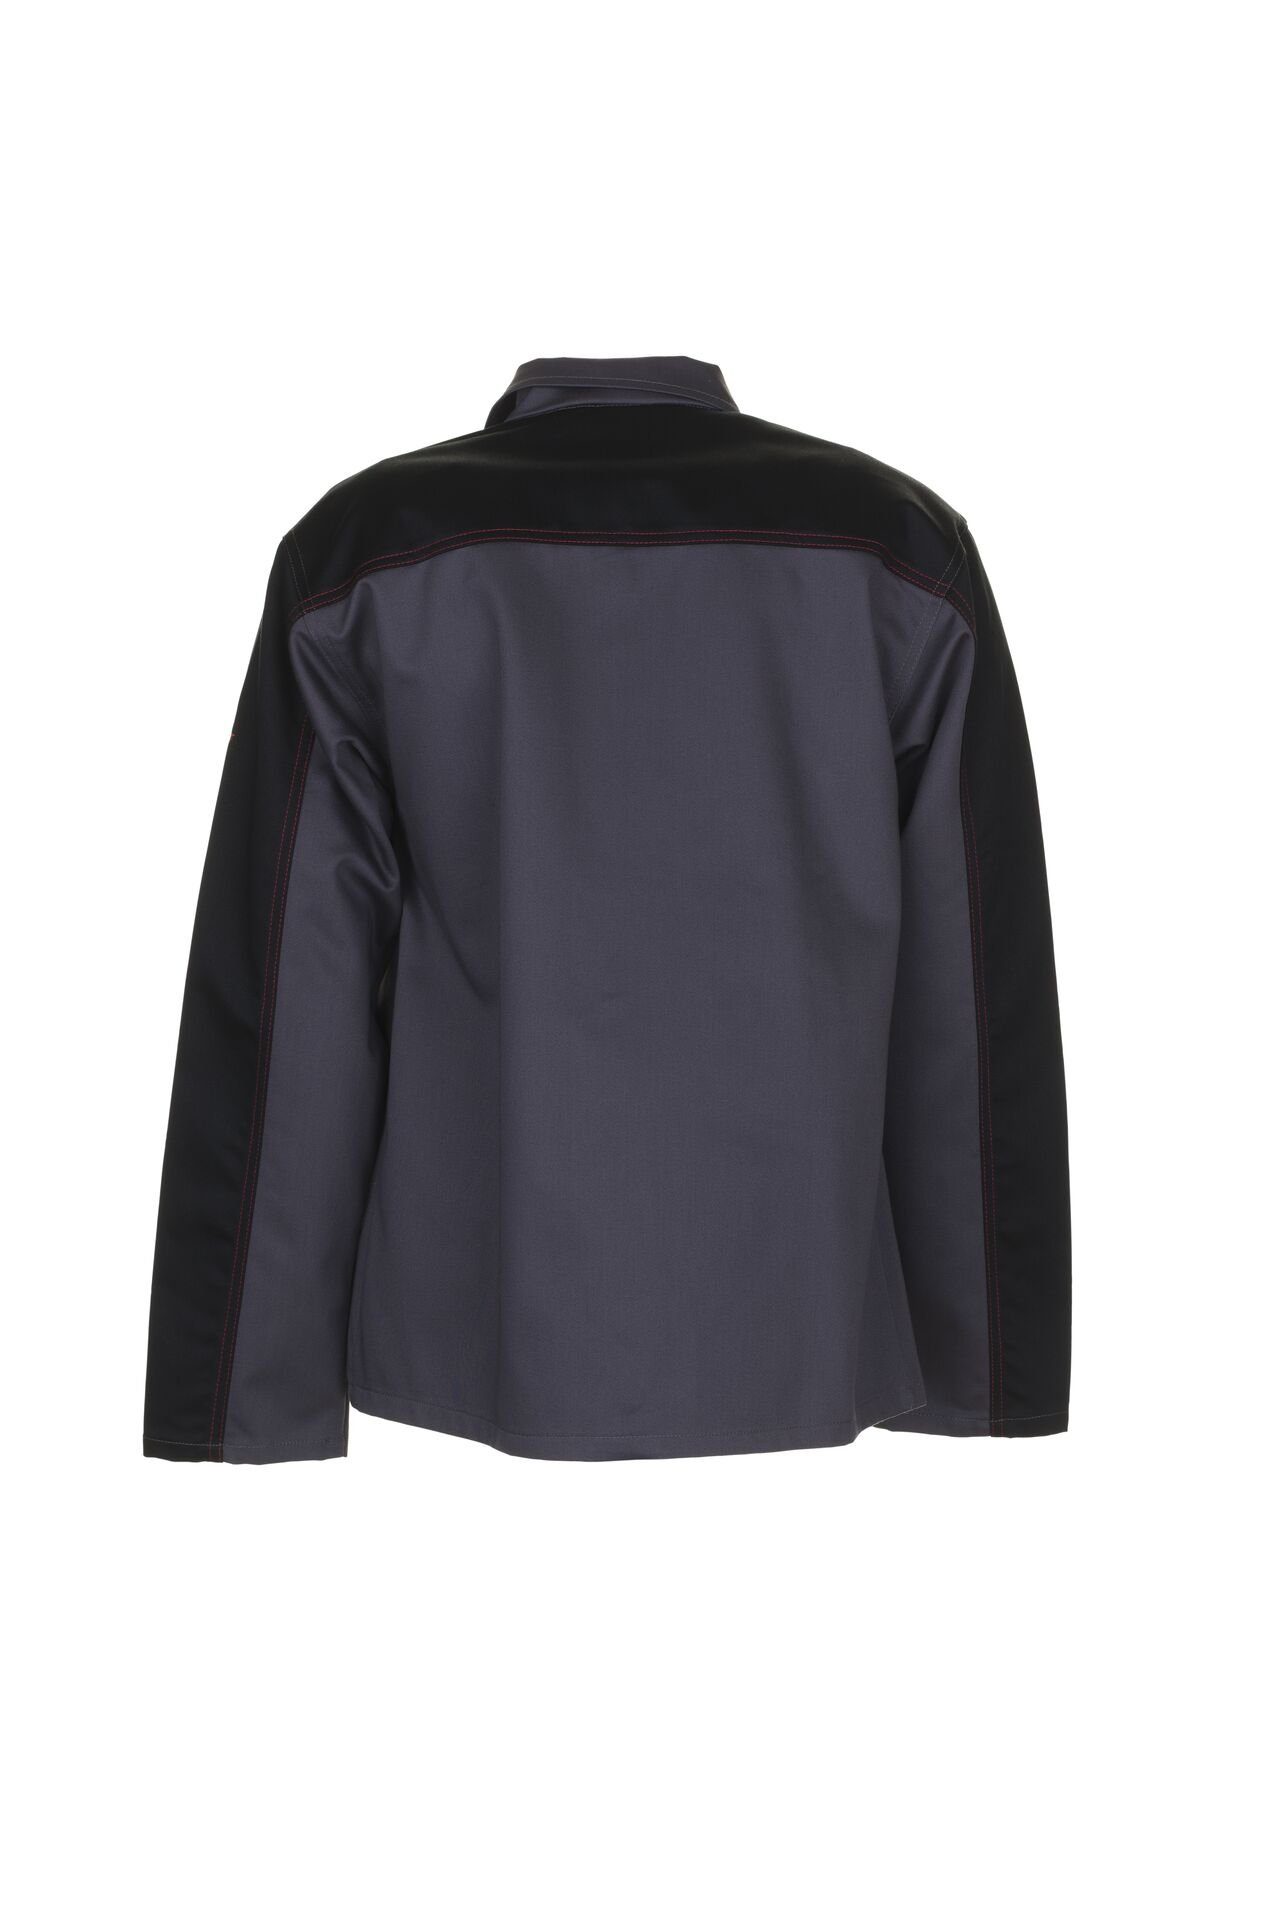 Planam Arbeitshose Jacke Weld Shield grau/schwarz Größe 60 (1-tlg)